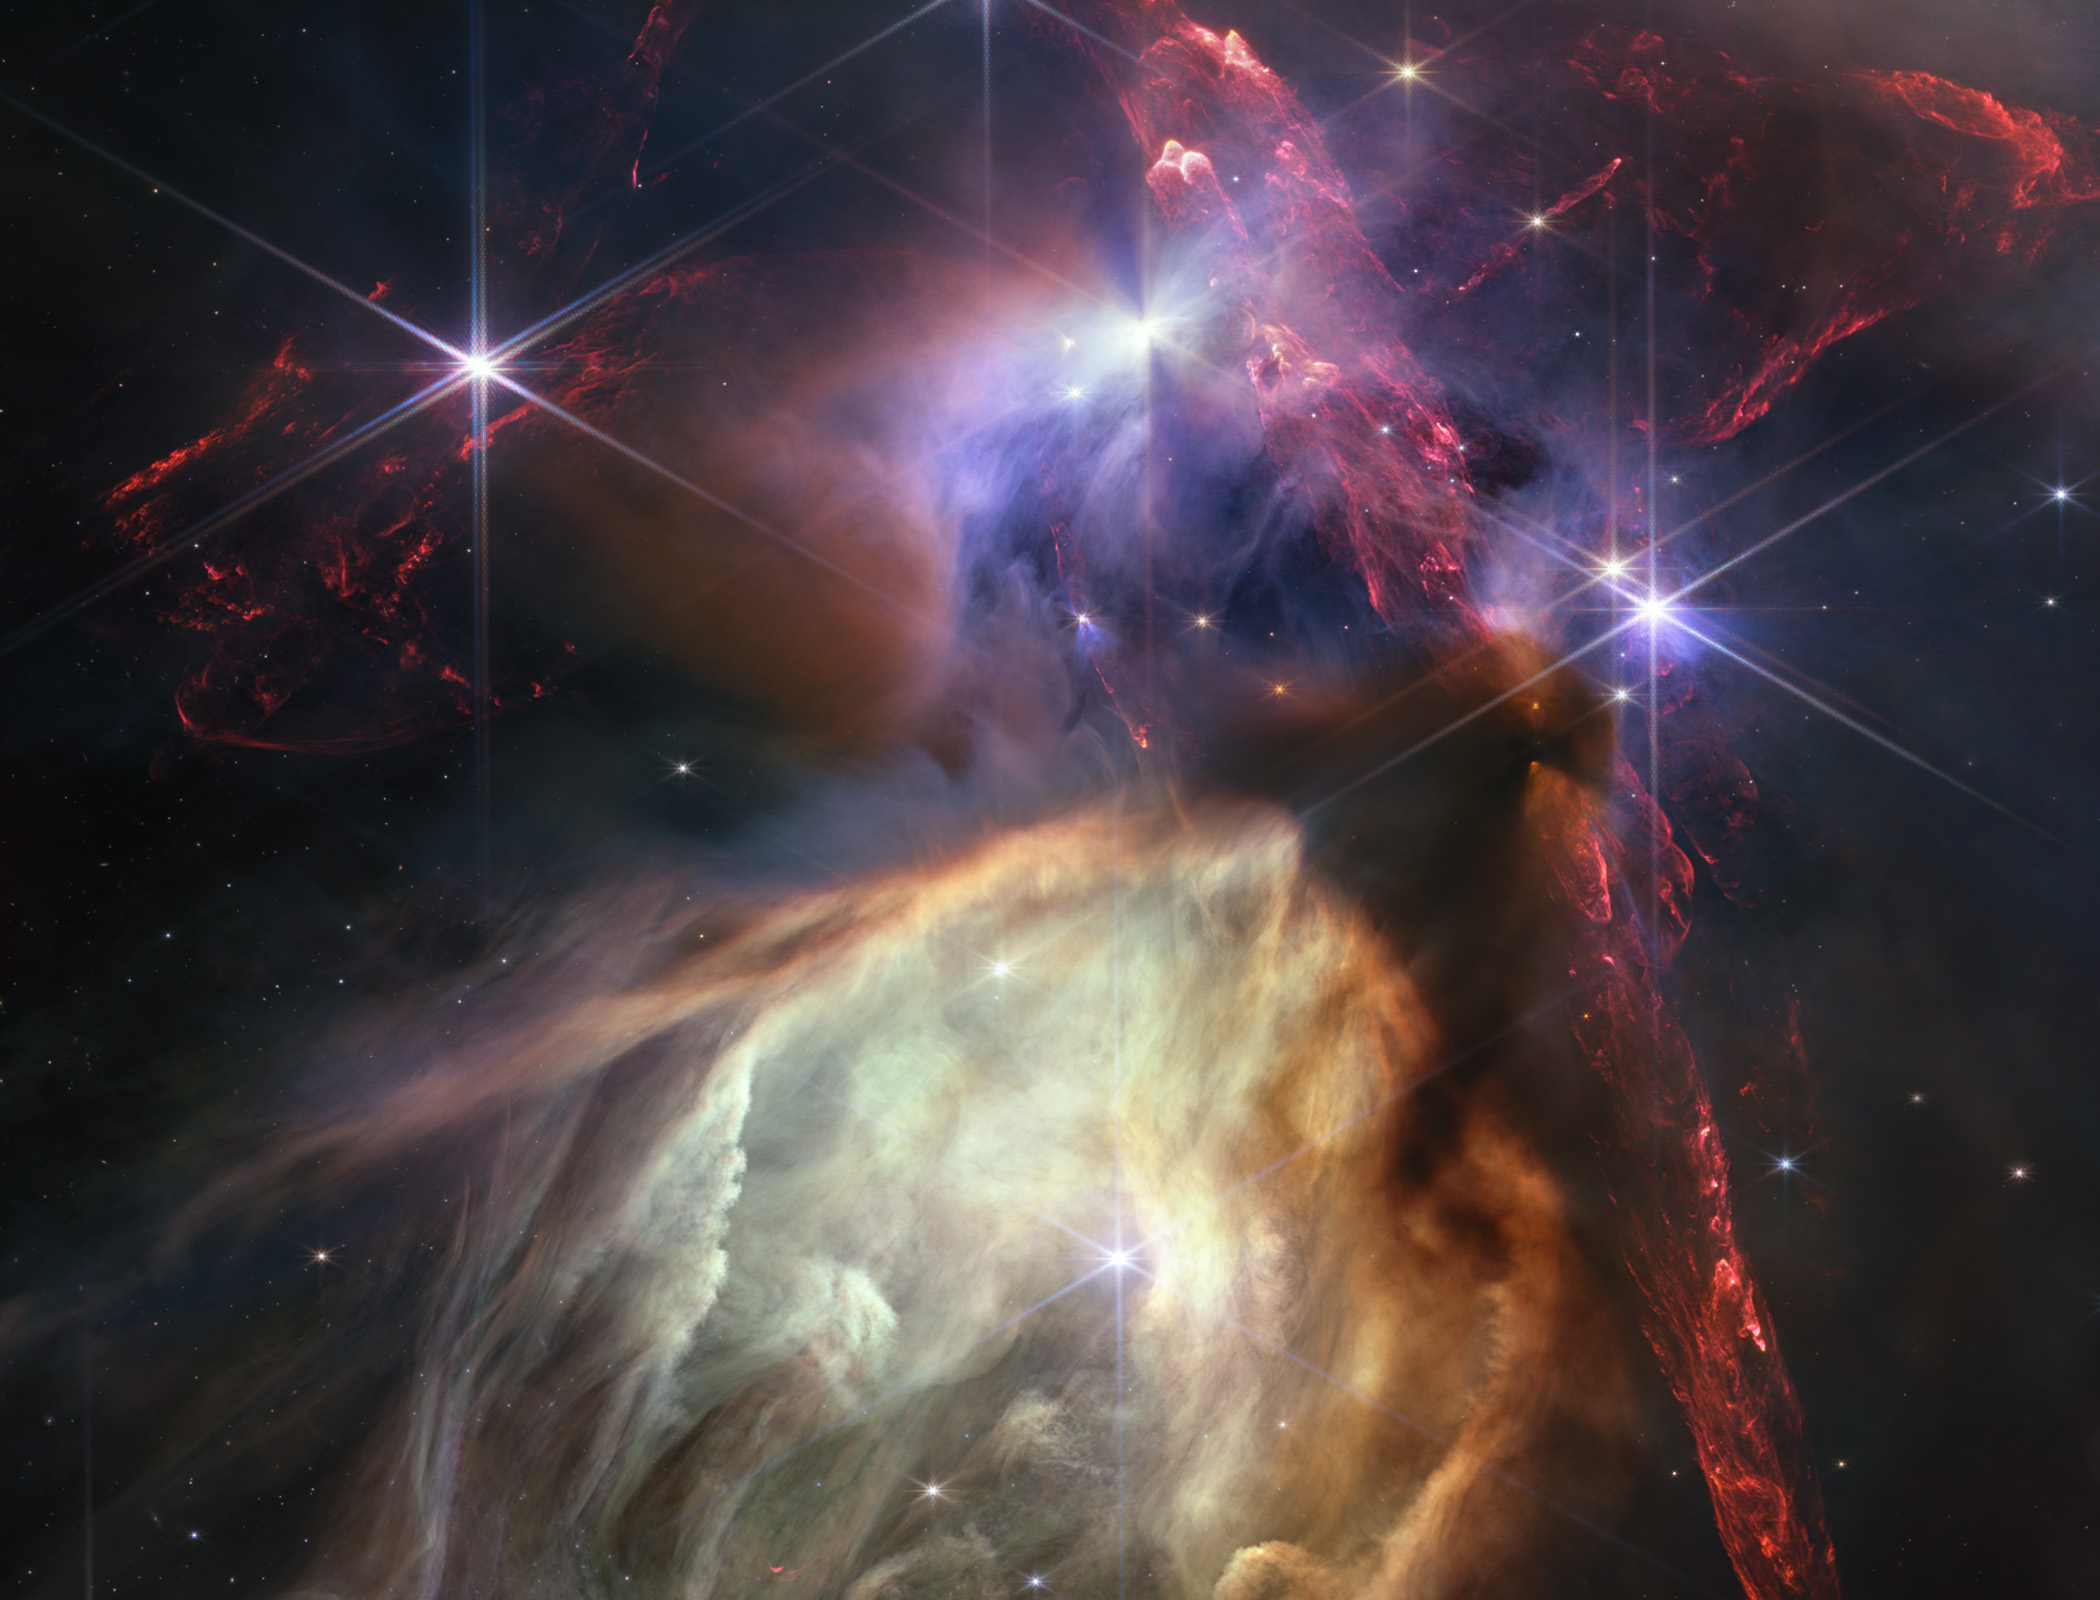 James Webb Telescope reveals closest star-forming region in unprecedented detail